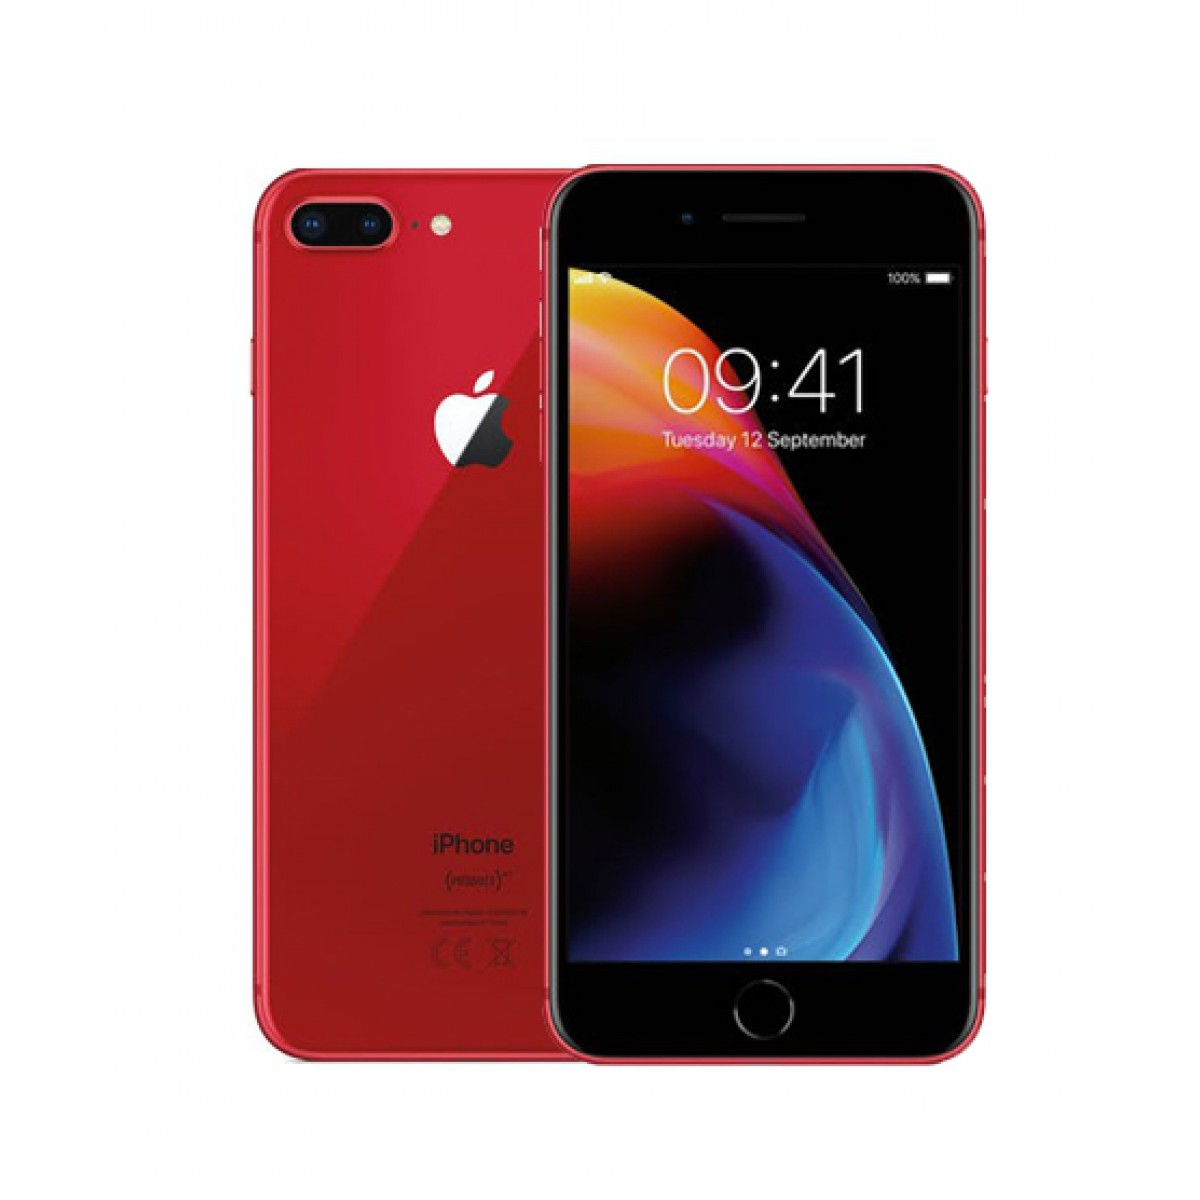 Apple iPhone 8 Plus (PRODUCT)RED - 256GB - (Verizon) A1864 (CDMA + 